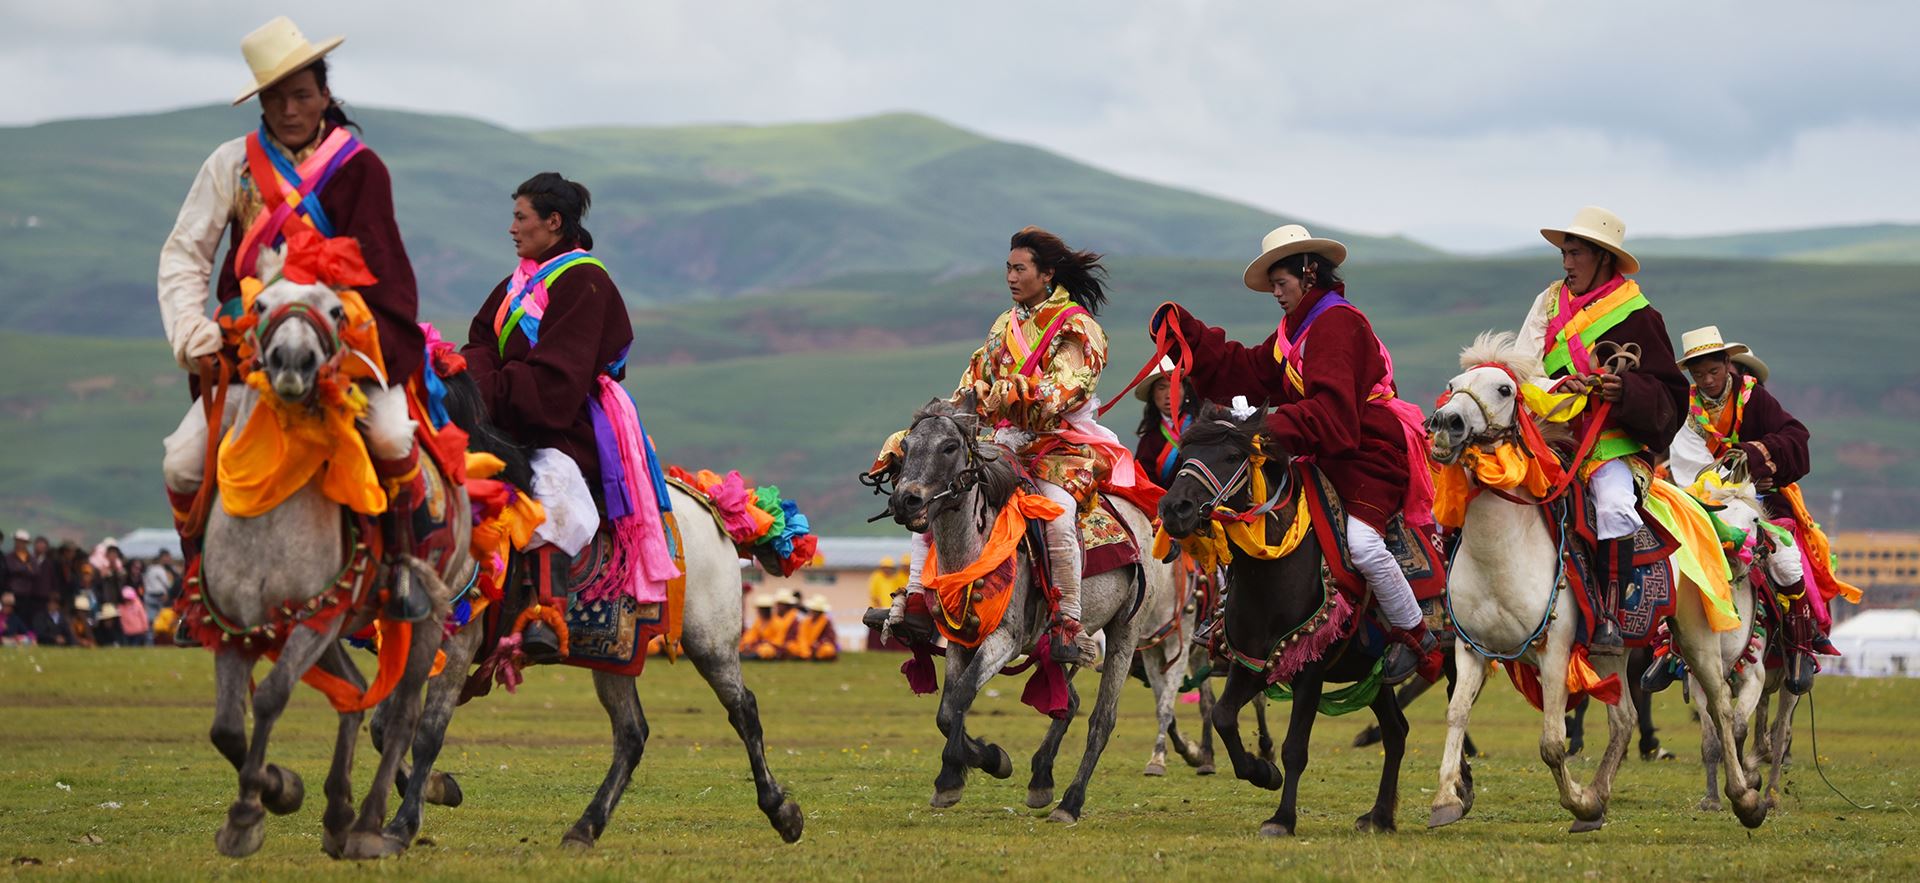 Tibet Tour during Horse Racing Festival in Naqu 2020